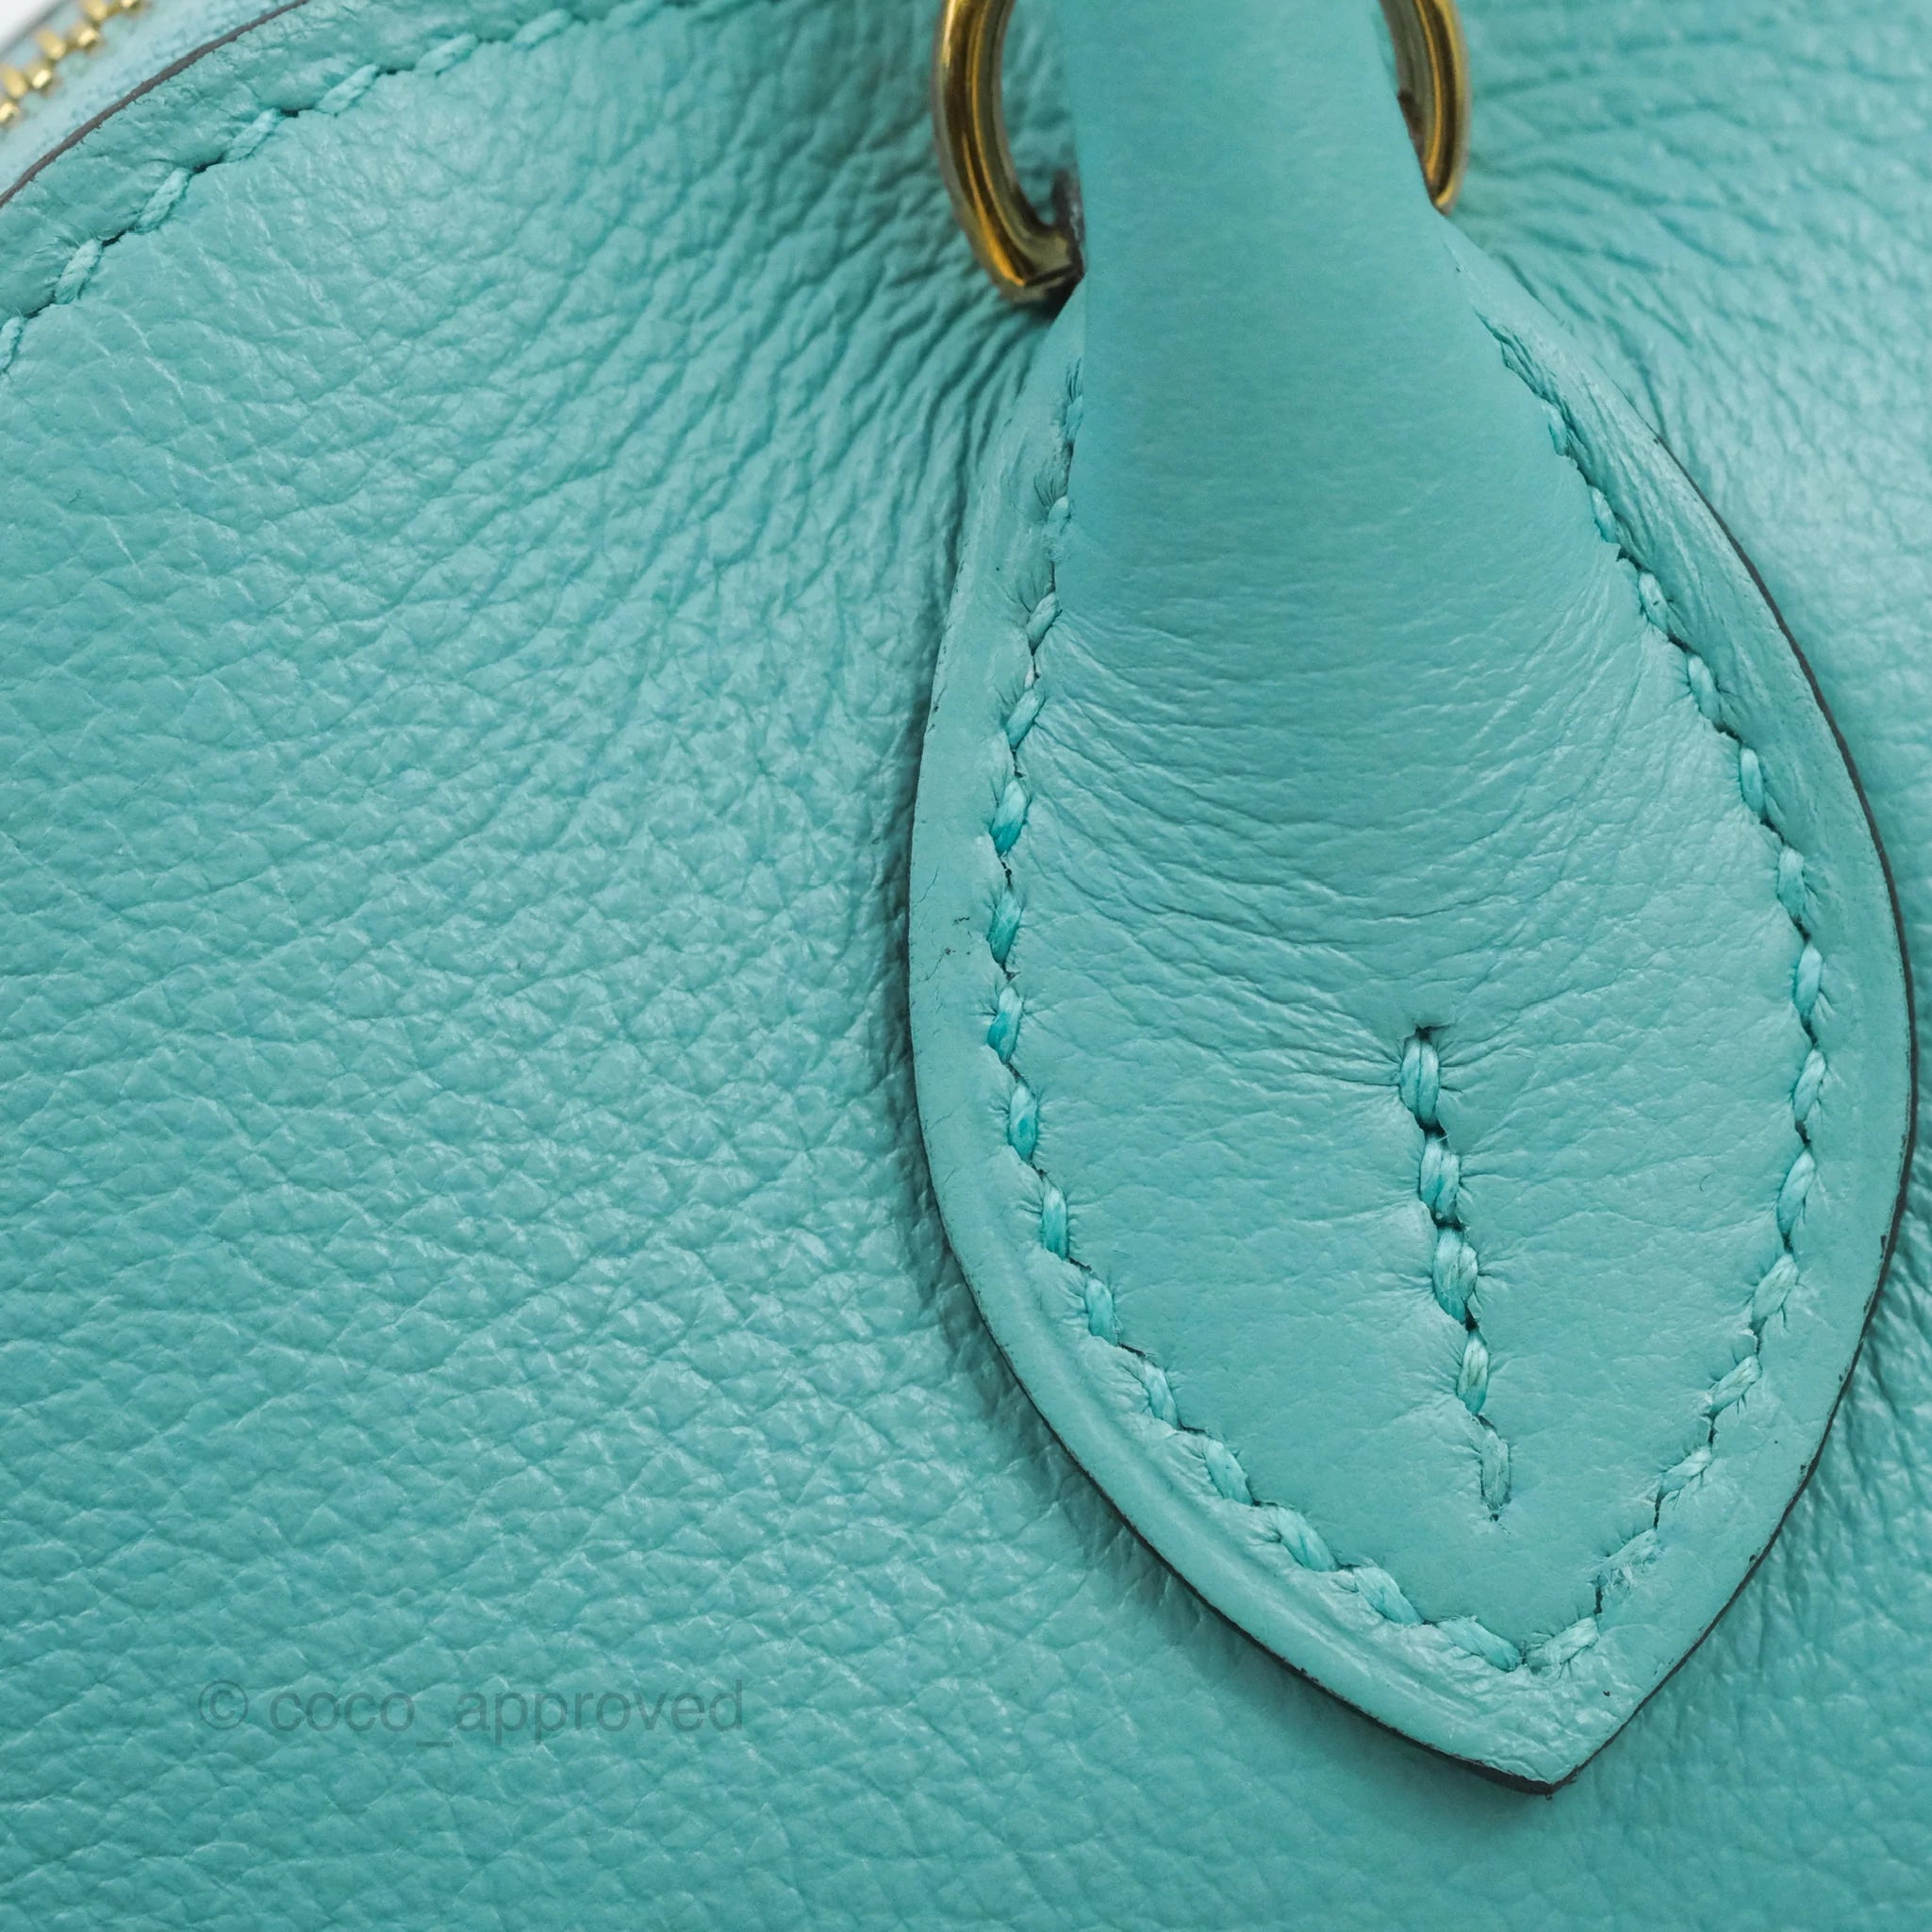 Hermès Bolide 27 Blue Epsom Silver Hardware – Coco Approved Studio